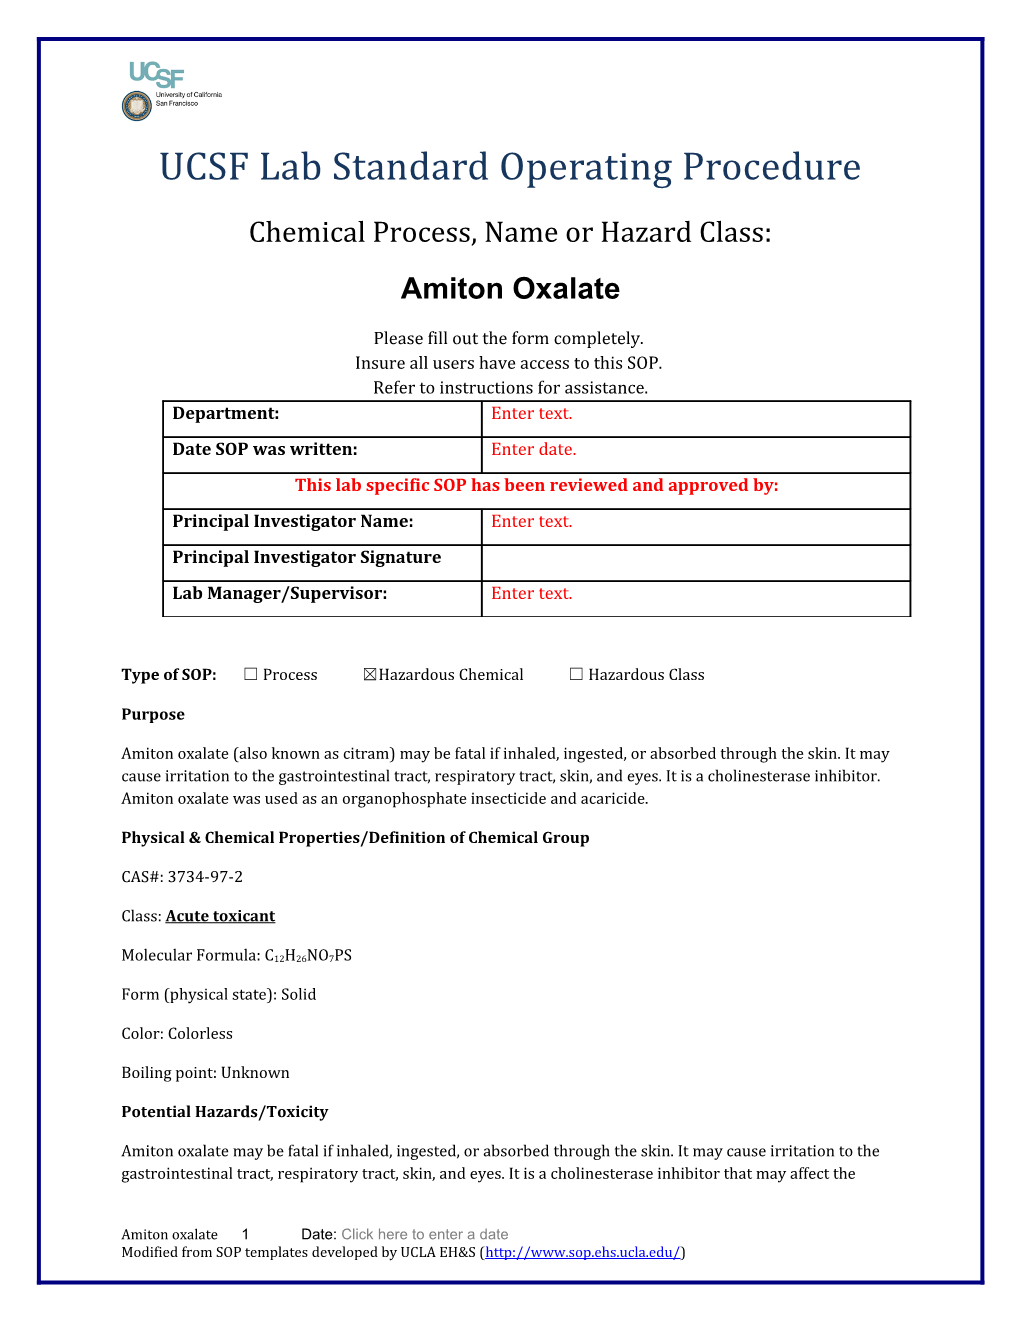 UCSF Lab Standard Operating Procedure s21